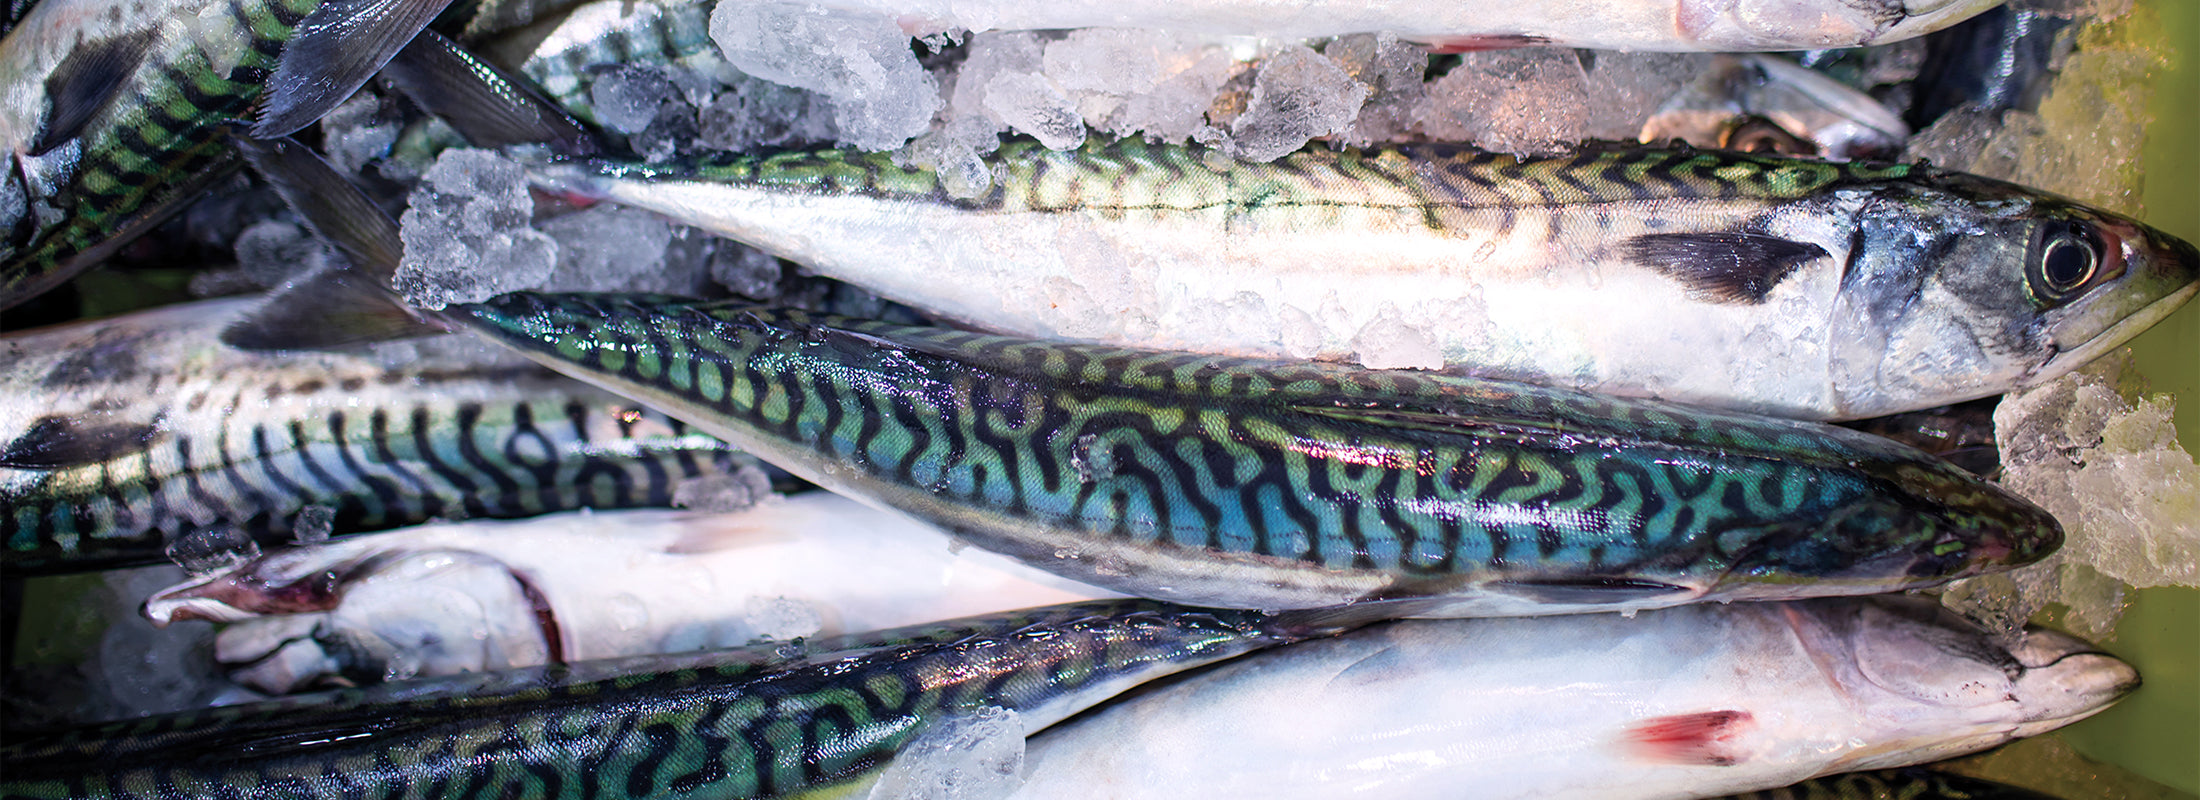 Freshly caught Atlantic Mackerel on ice